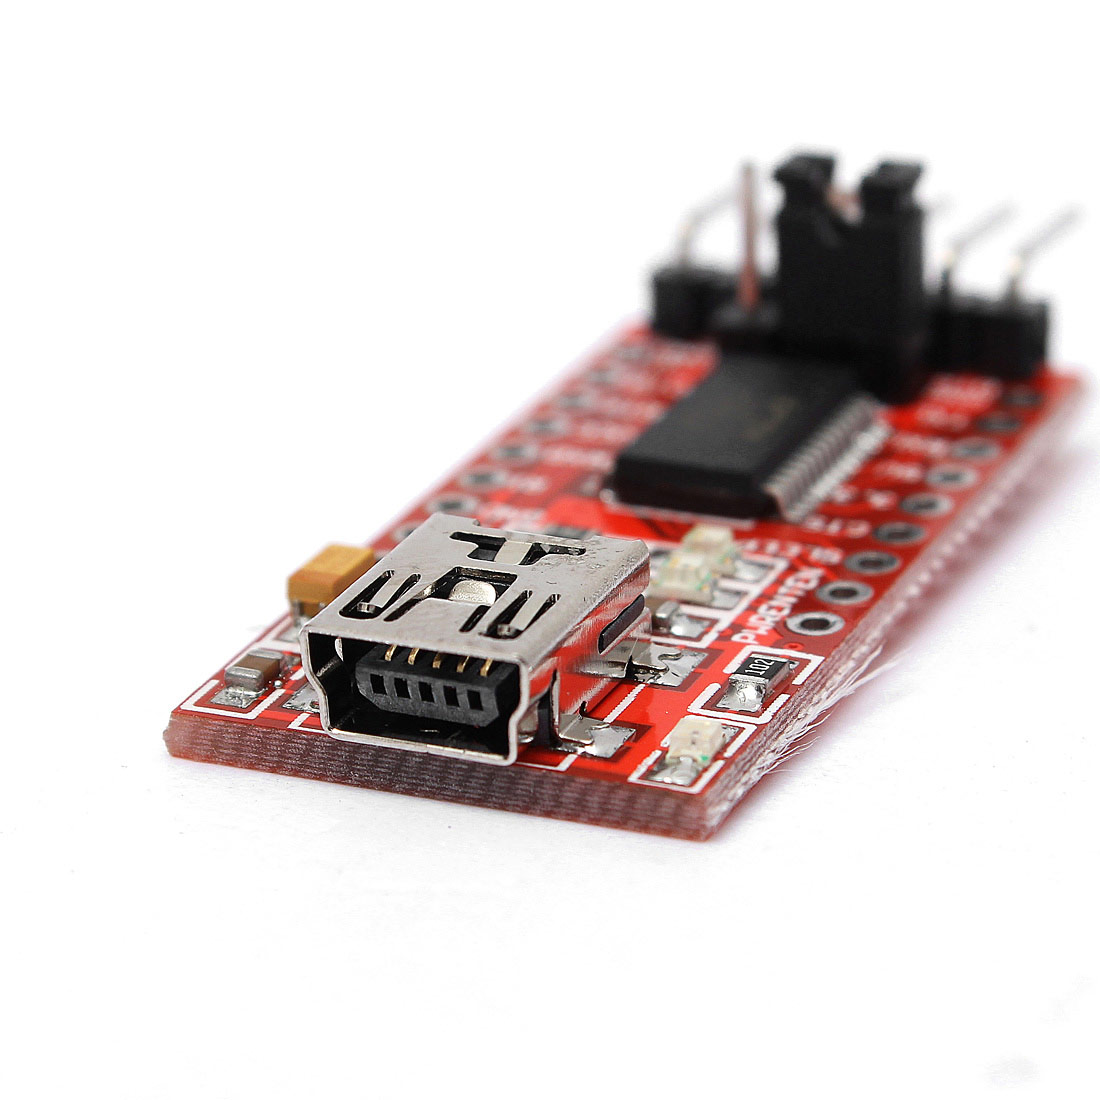 Geekcreitreg-FT232RL-FTDI-USB-To-TTL-Serial-Converter-Adapter-Module-Geekcreit-for-Arduino---product-917226